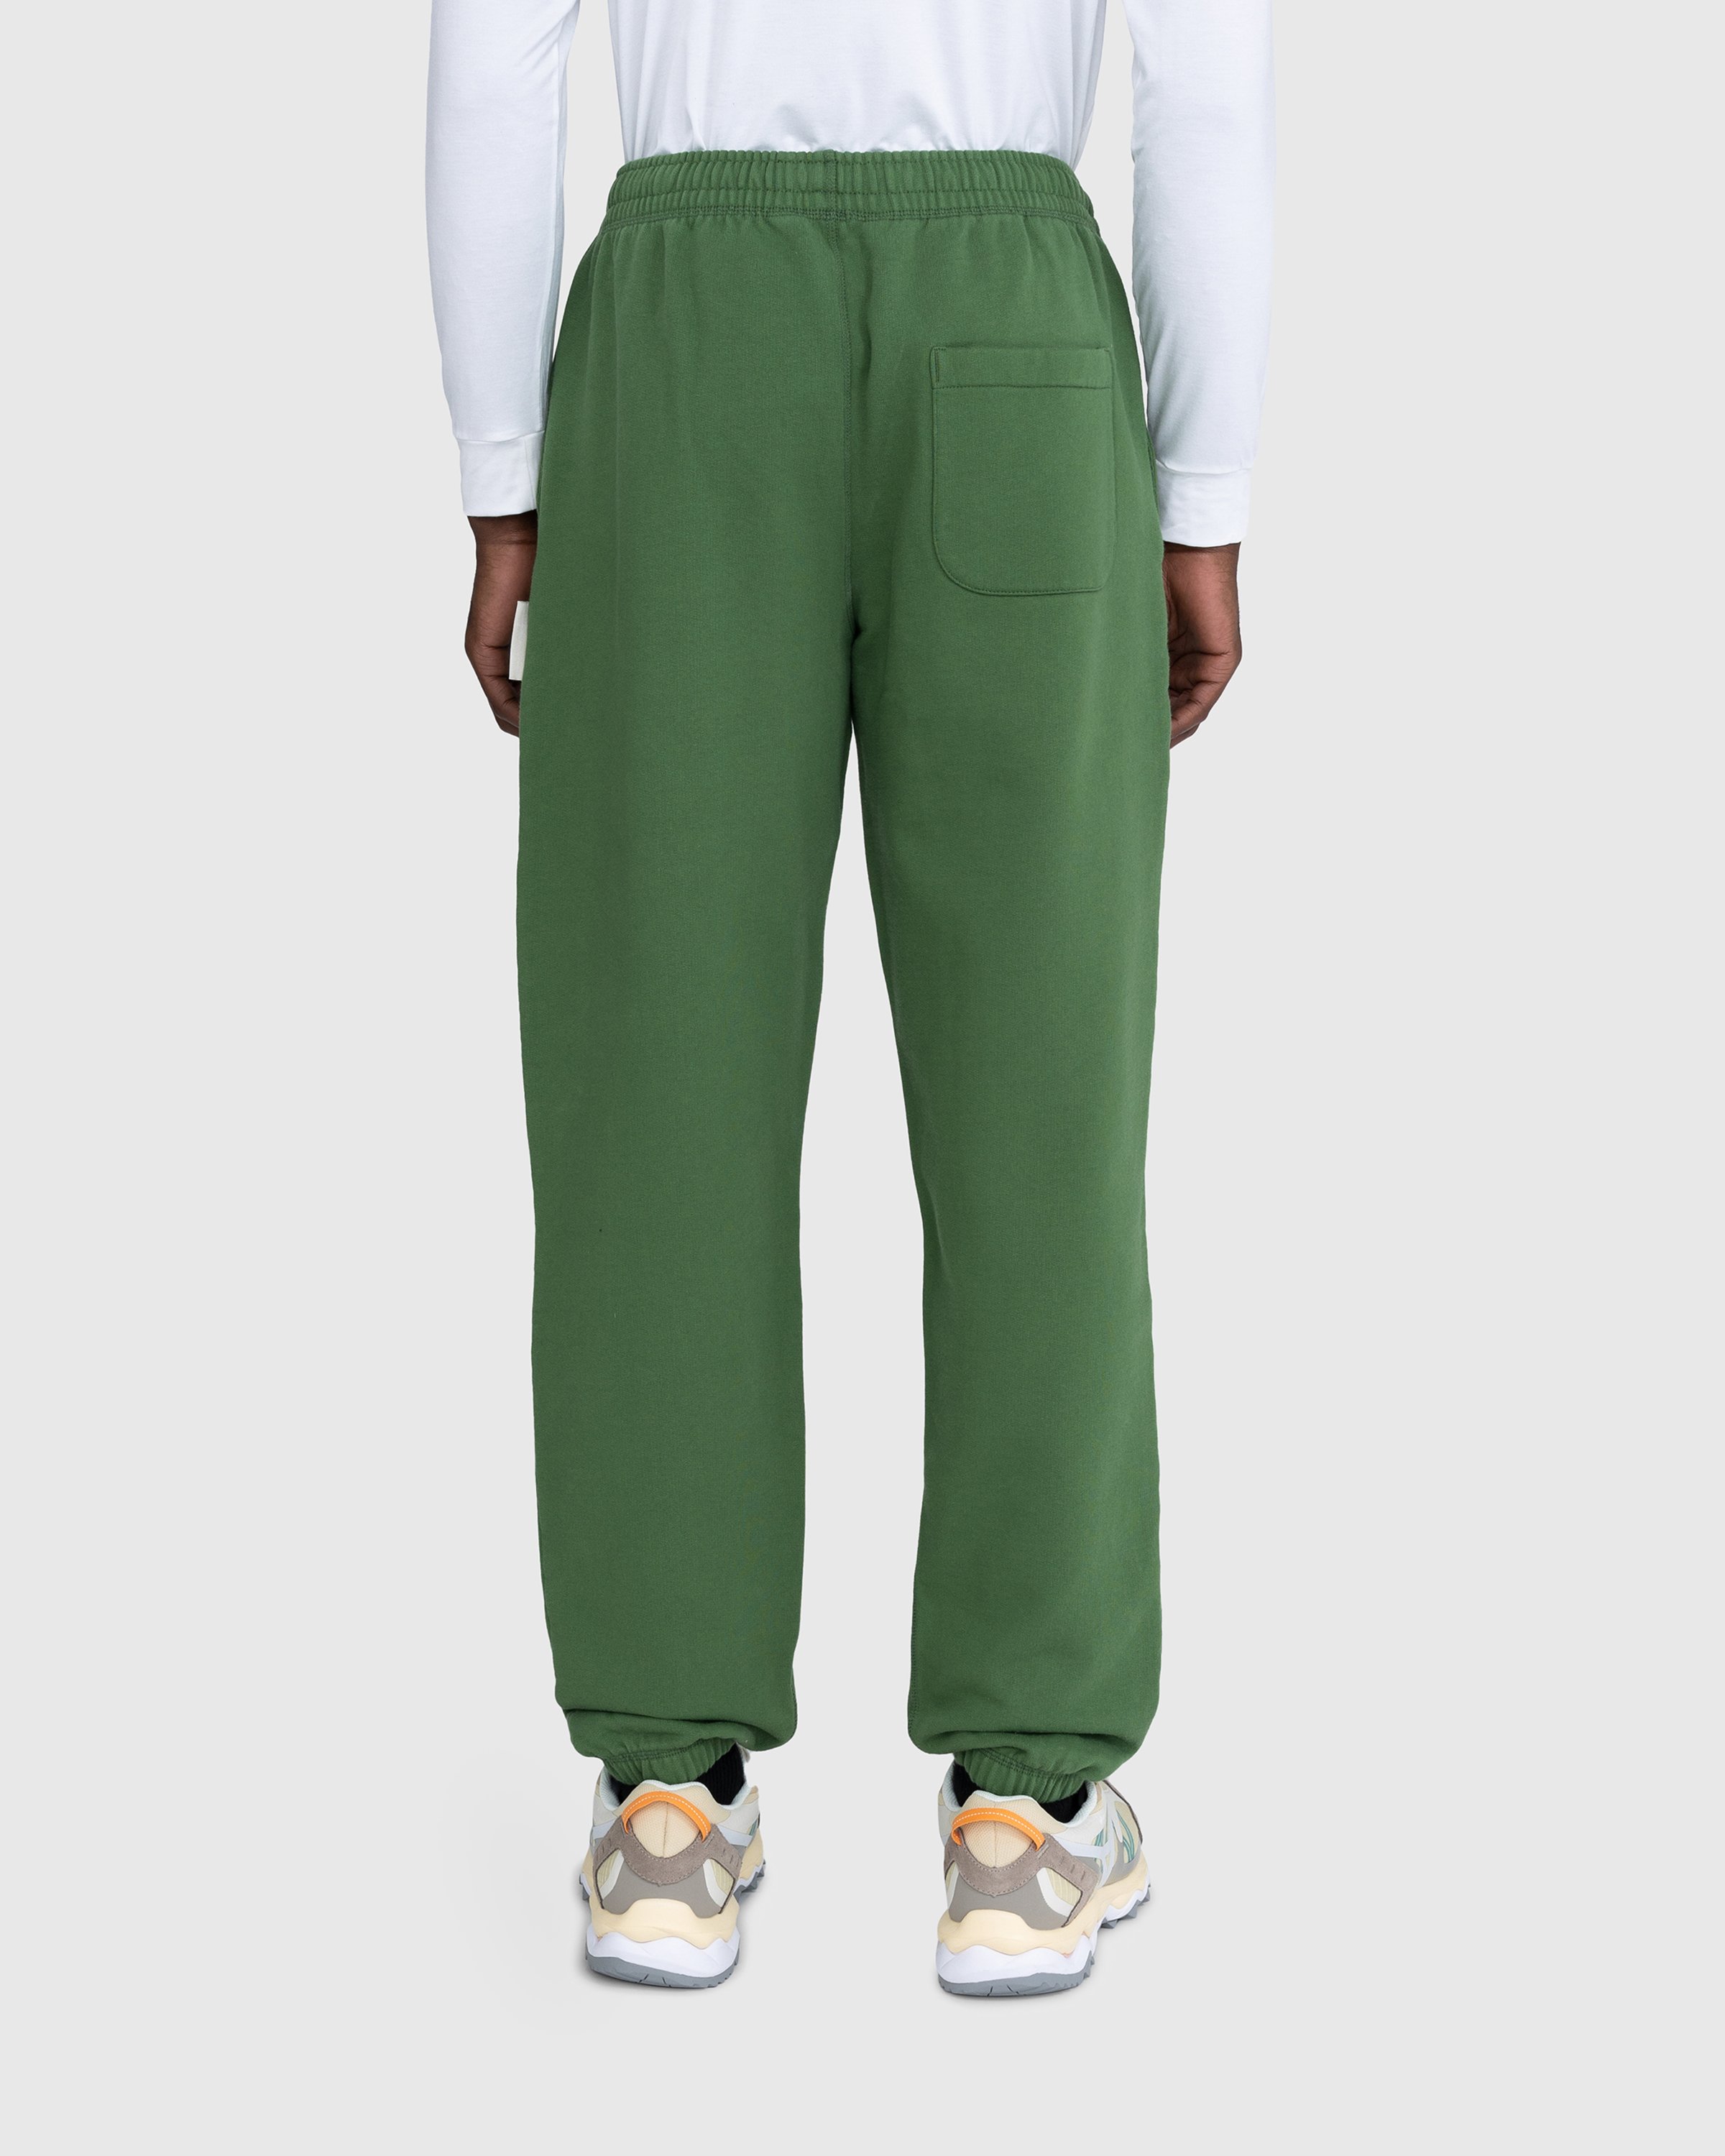 Highsnobiety - Heavy Fleece Pant Dark Green - Clothing - Green - Image 3